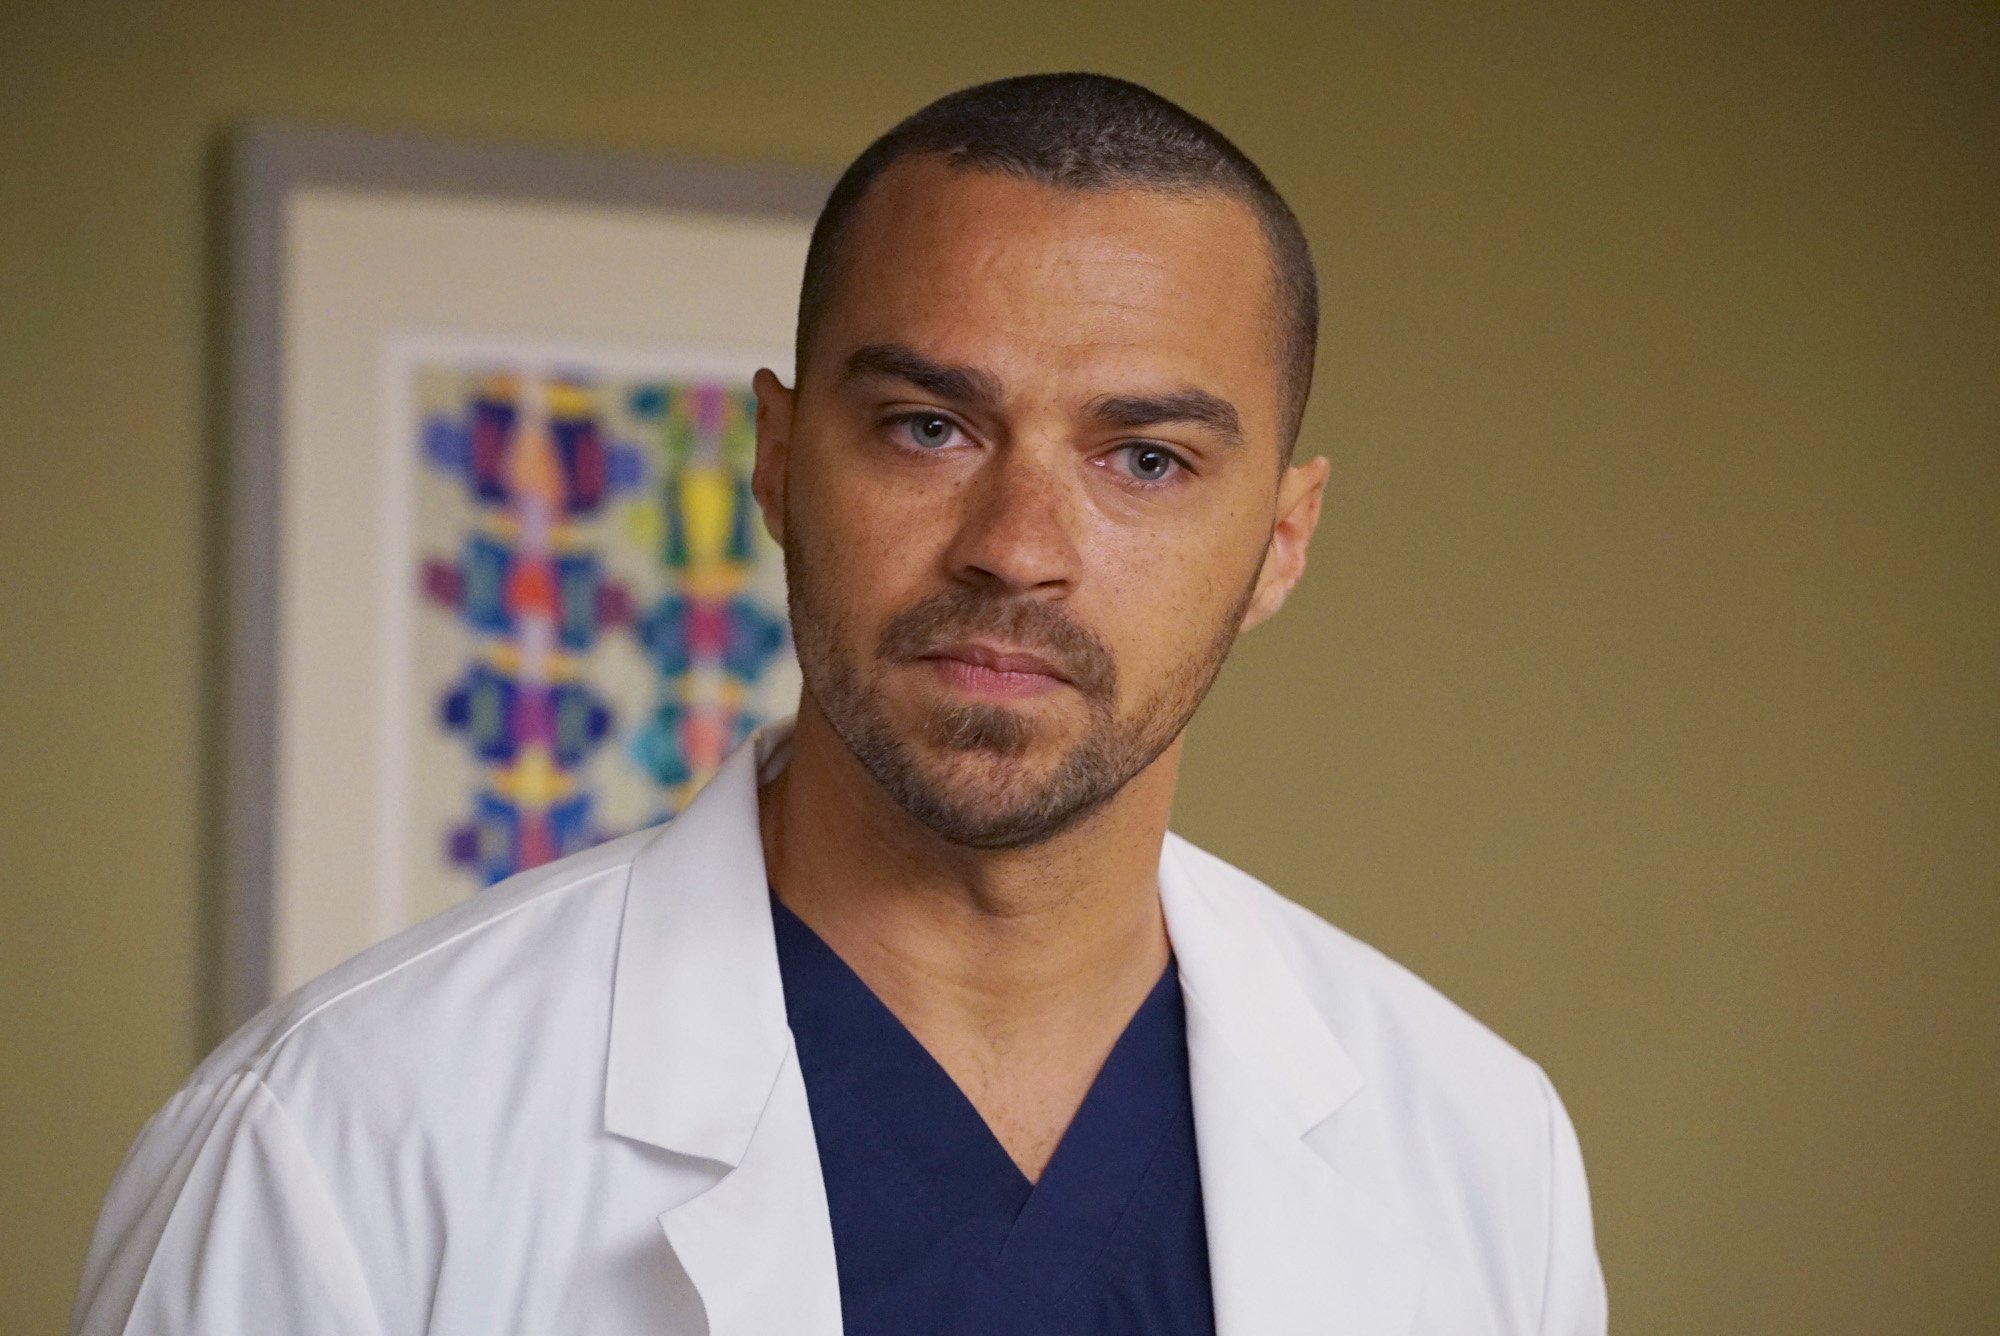 Jesse Williams as Jackson Avery on ABC drama 'Grey's Anatomy.' He's wearing dark blue scrubs and a white medical coat.